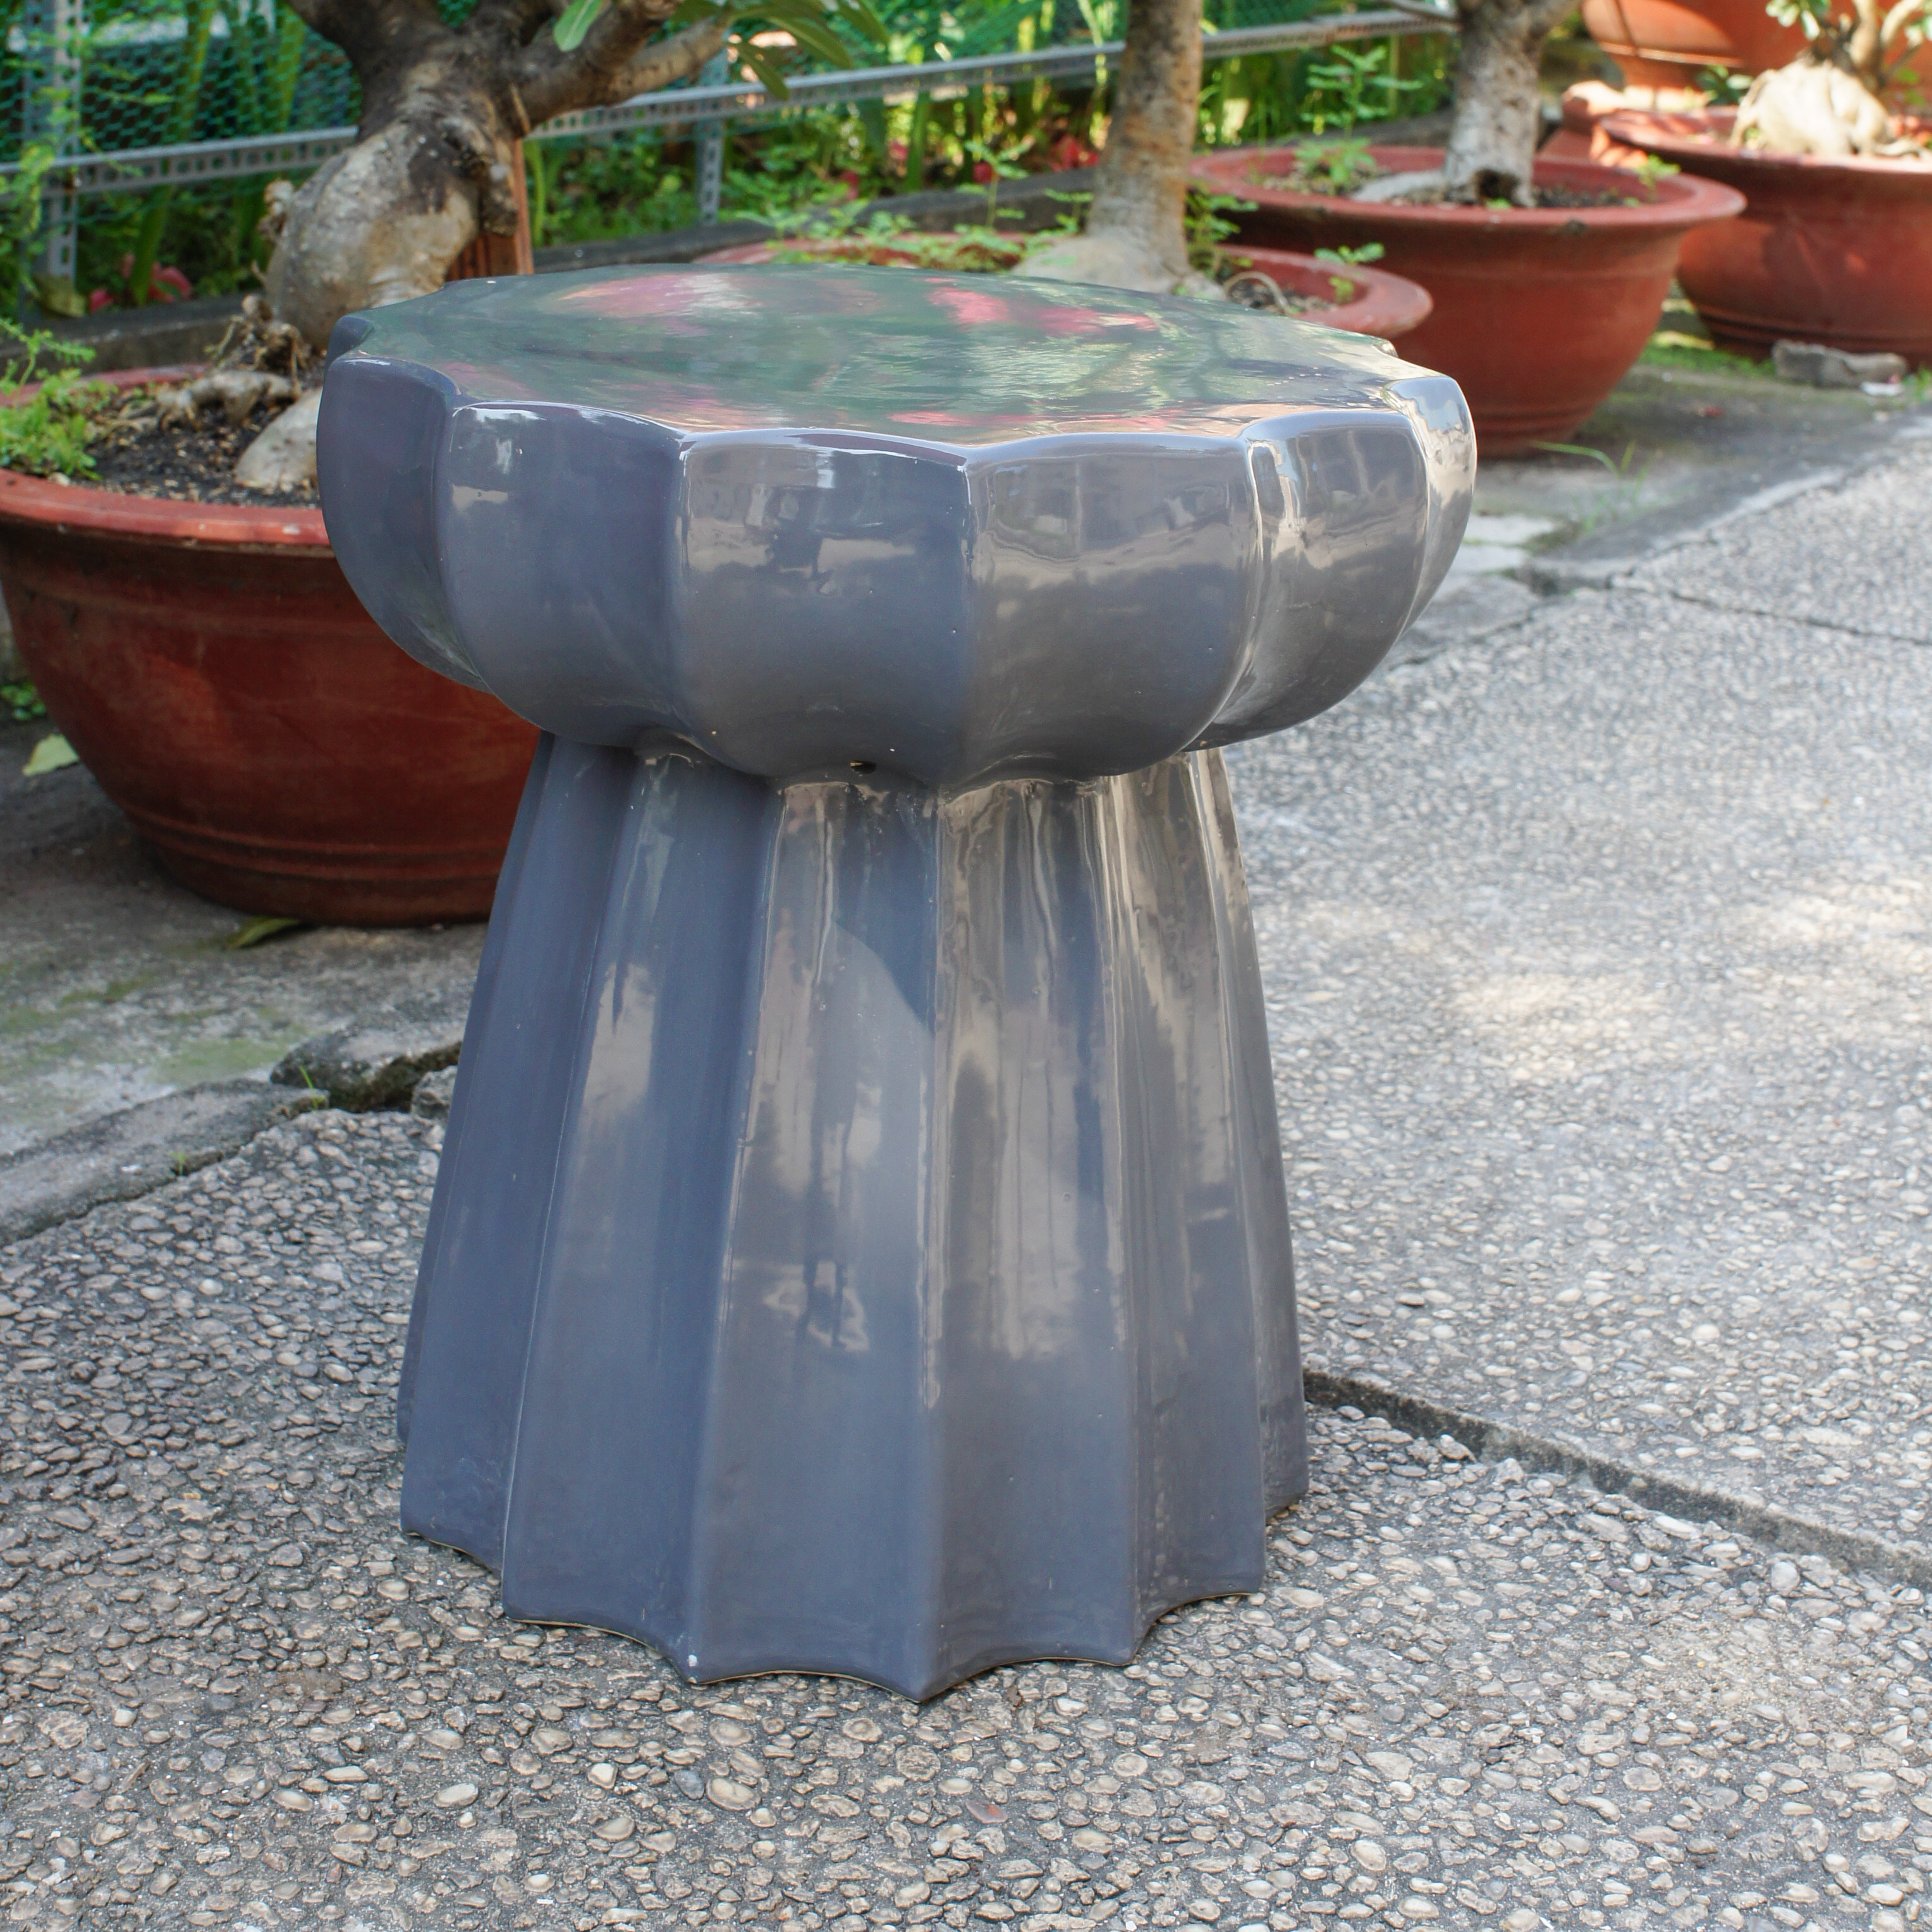 International Caravan Round Scalloped Ceramic Garden Stool - image 1 of 4